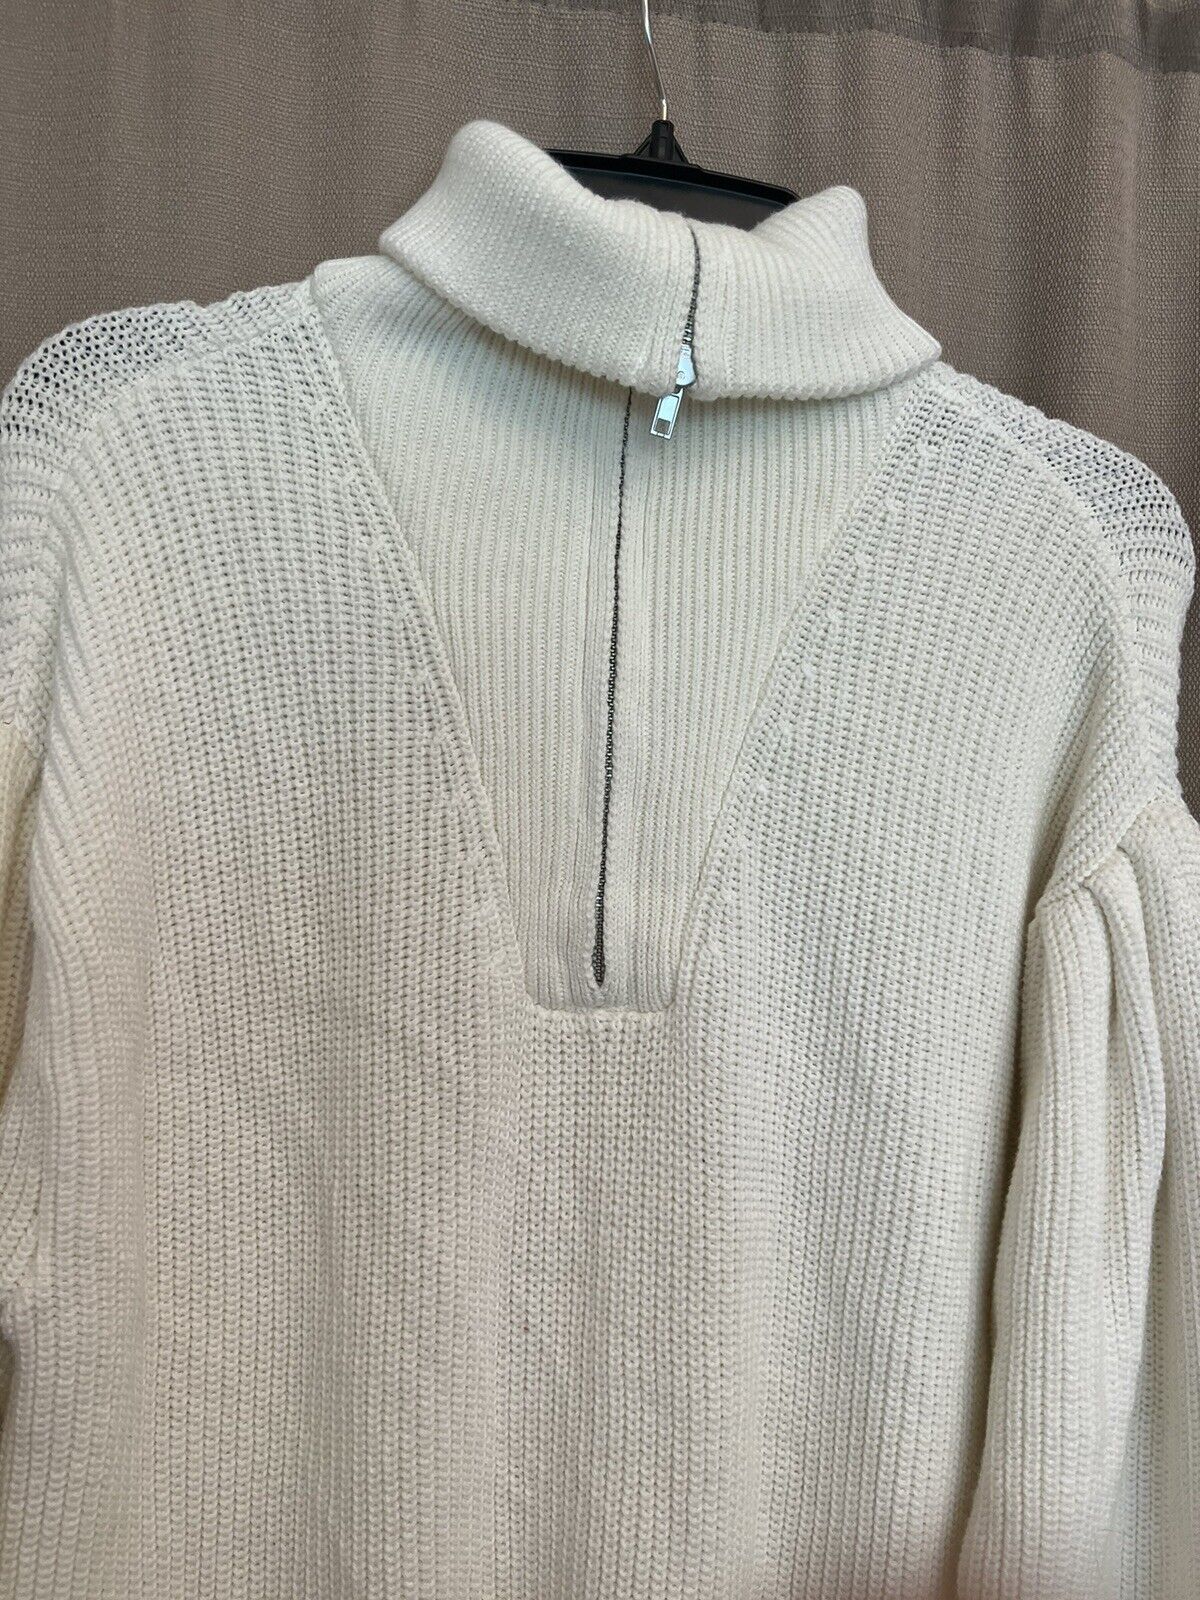 Aqua White Long Sweater $35